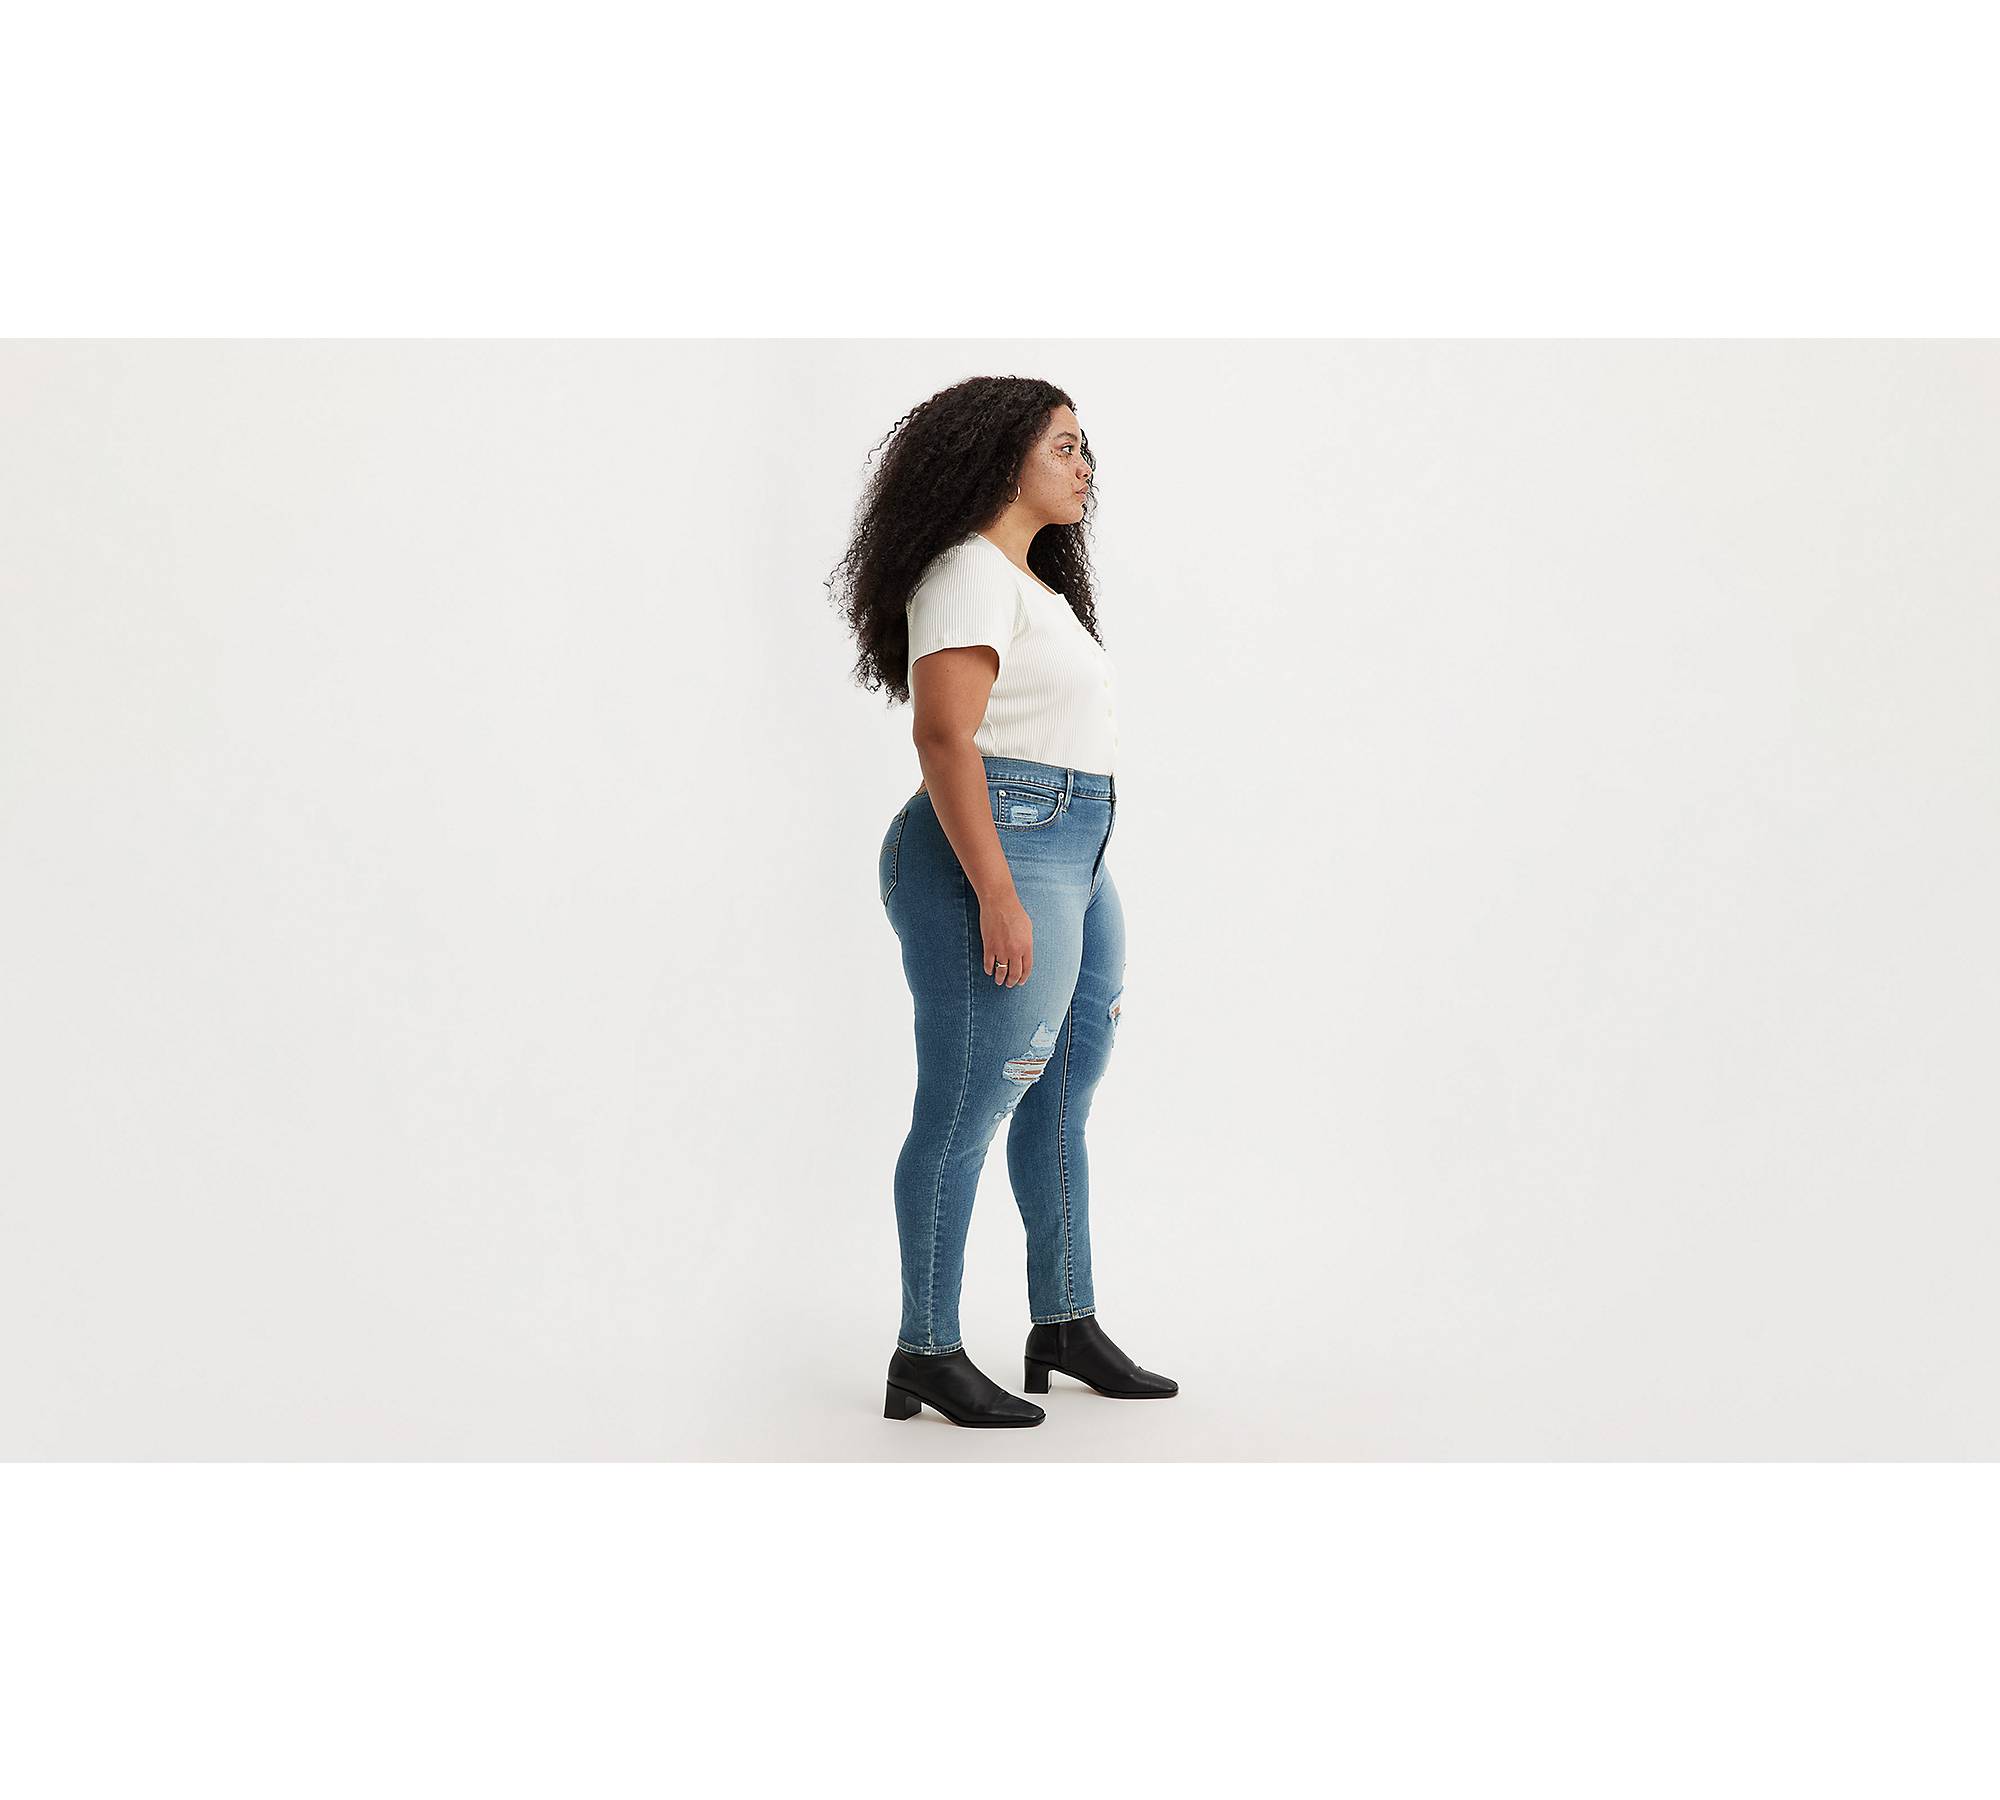 711 Skinny Women's Jeans (plus Size) - Medium Wash